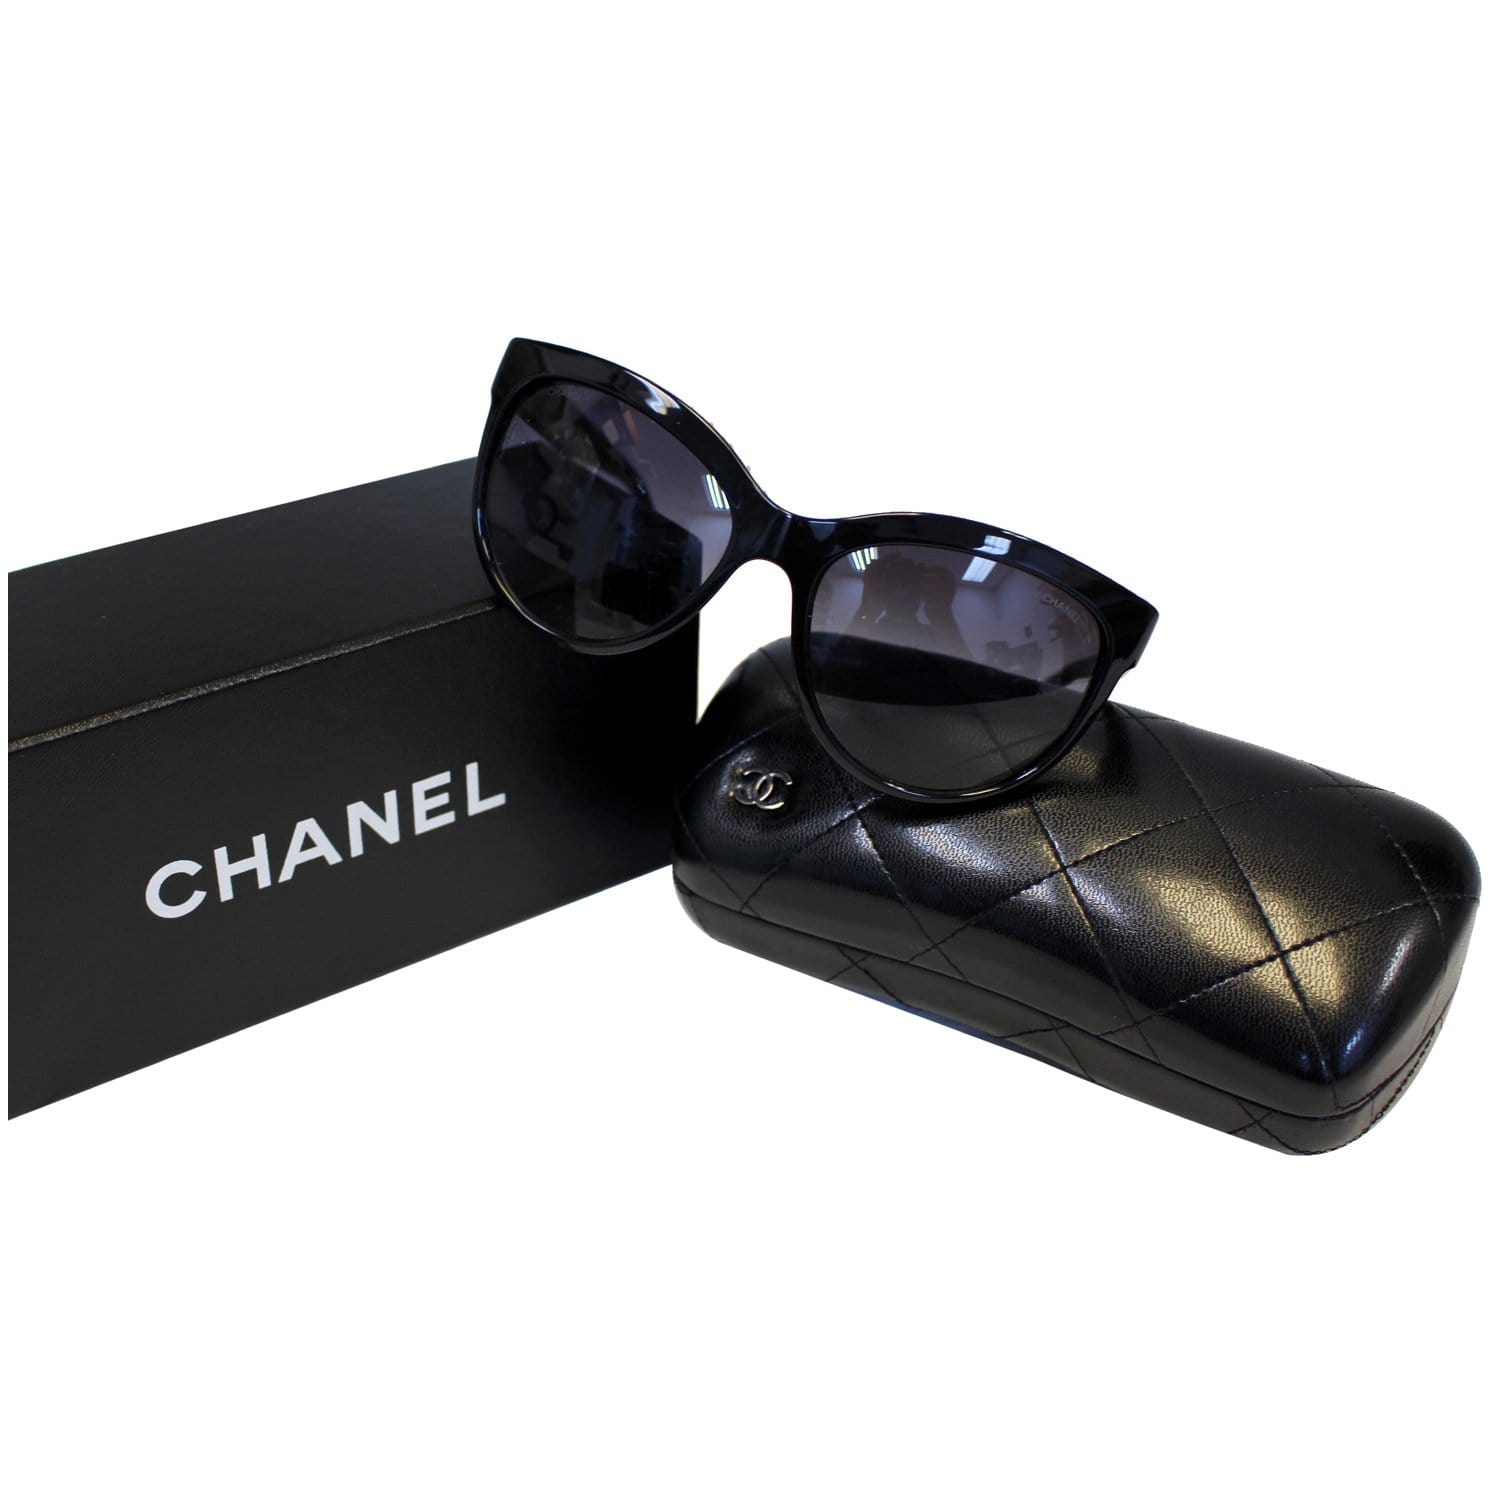 Chanel Sunglasses Repair